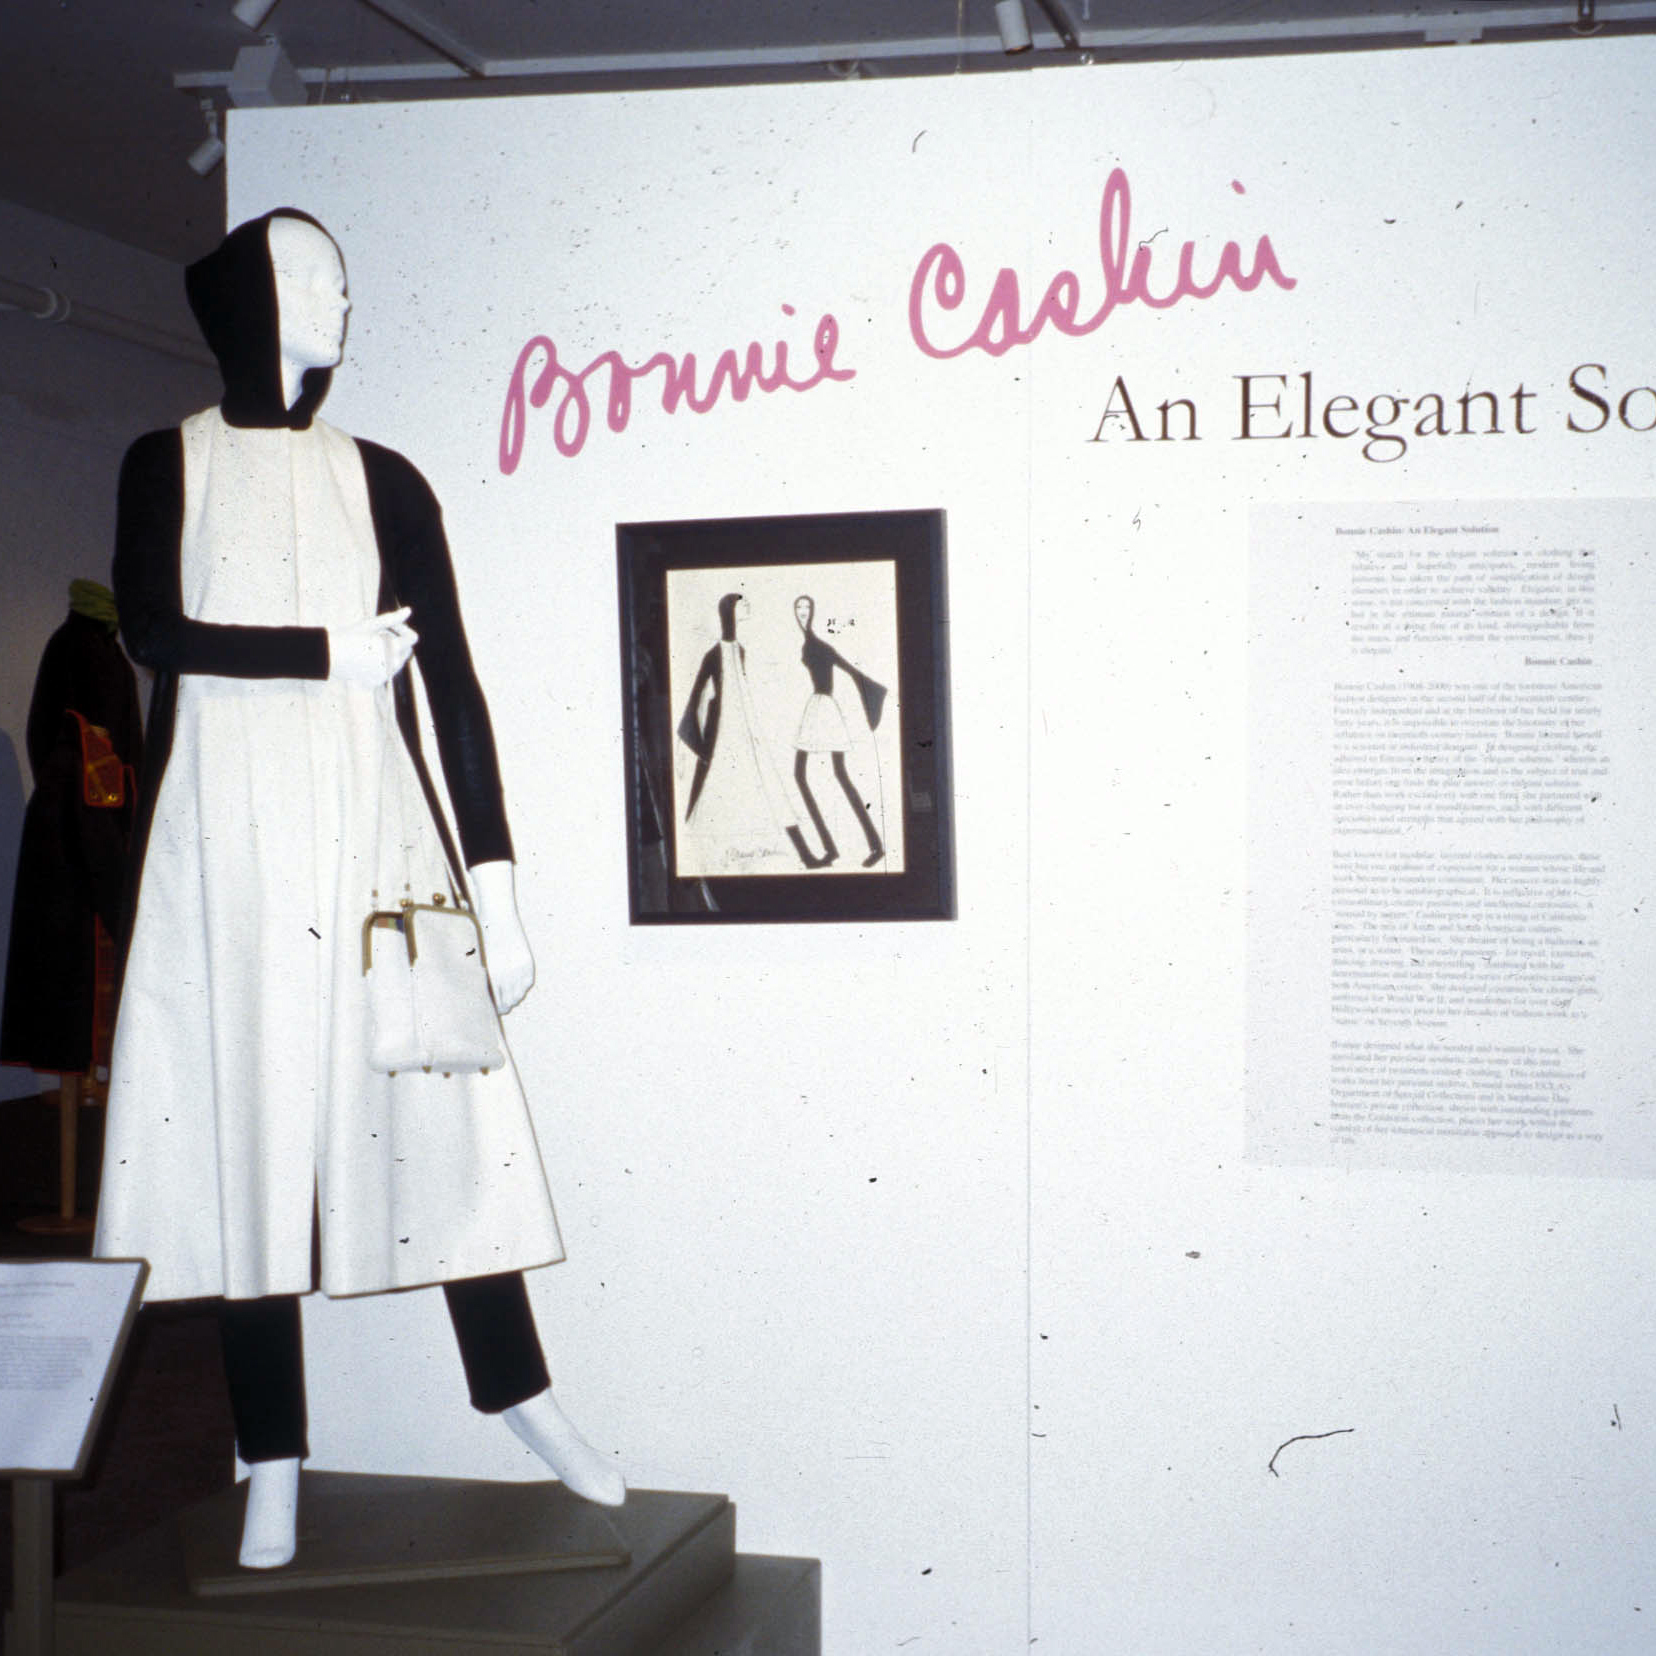 Bonnie Cashin: An Elegant Solution objects on display